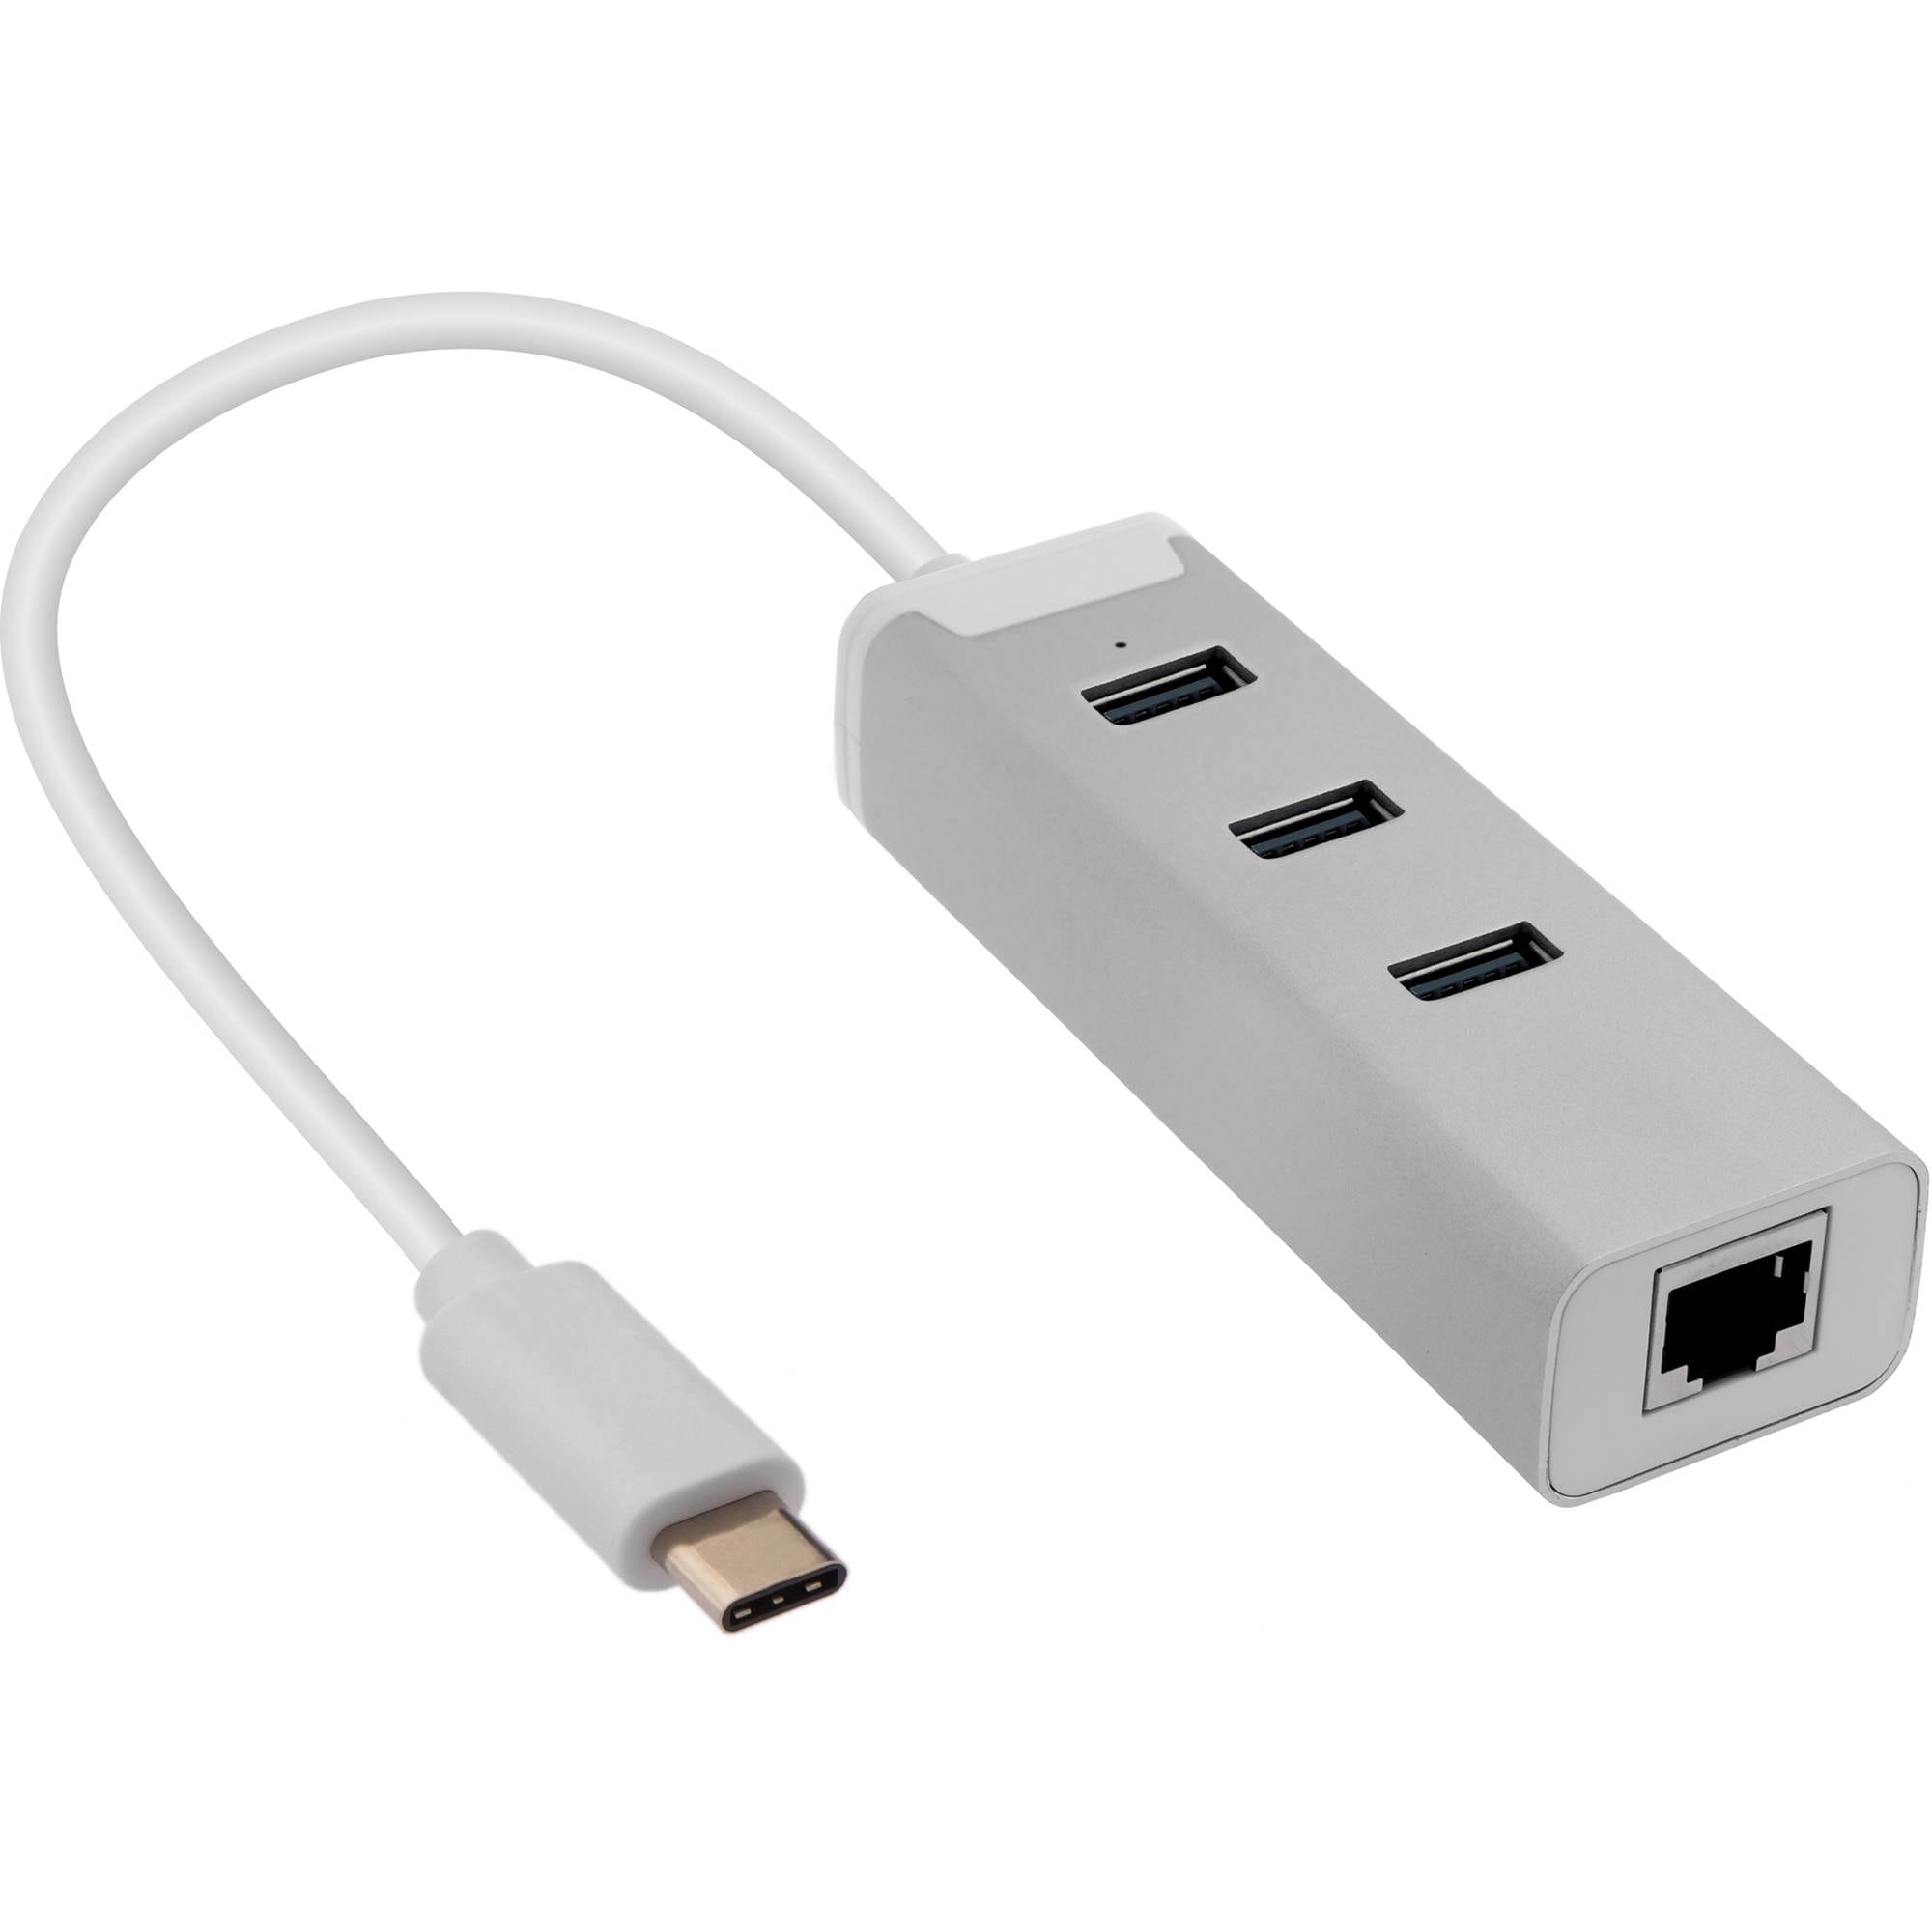 Tente utilizar outro cabo USB: O cabo pode estar danificado e afetando a velocidade de transferência.
Evite desconectar o dispositivo USB durante uma transferência de arquivos.